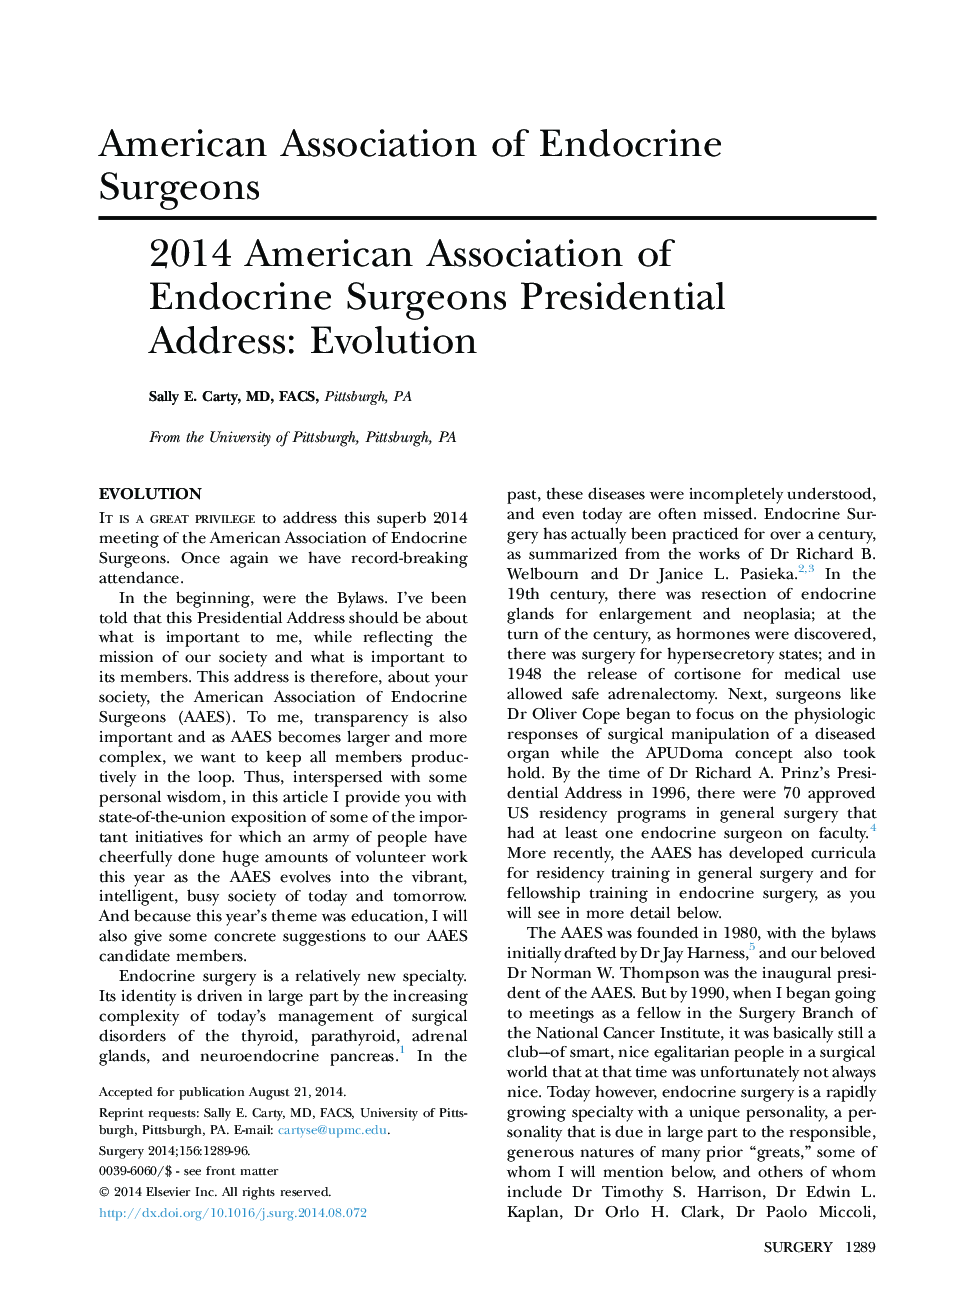 2014 American Association of Endocrine Surgeons Presidential Address: Evolution